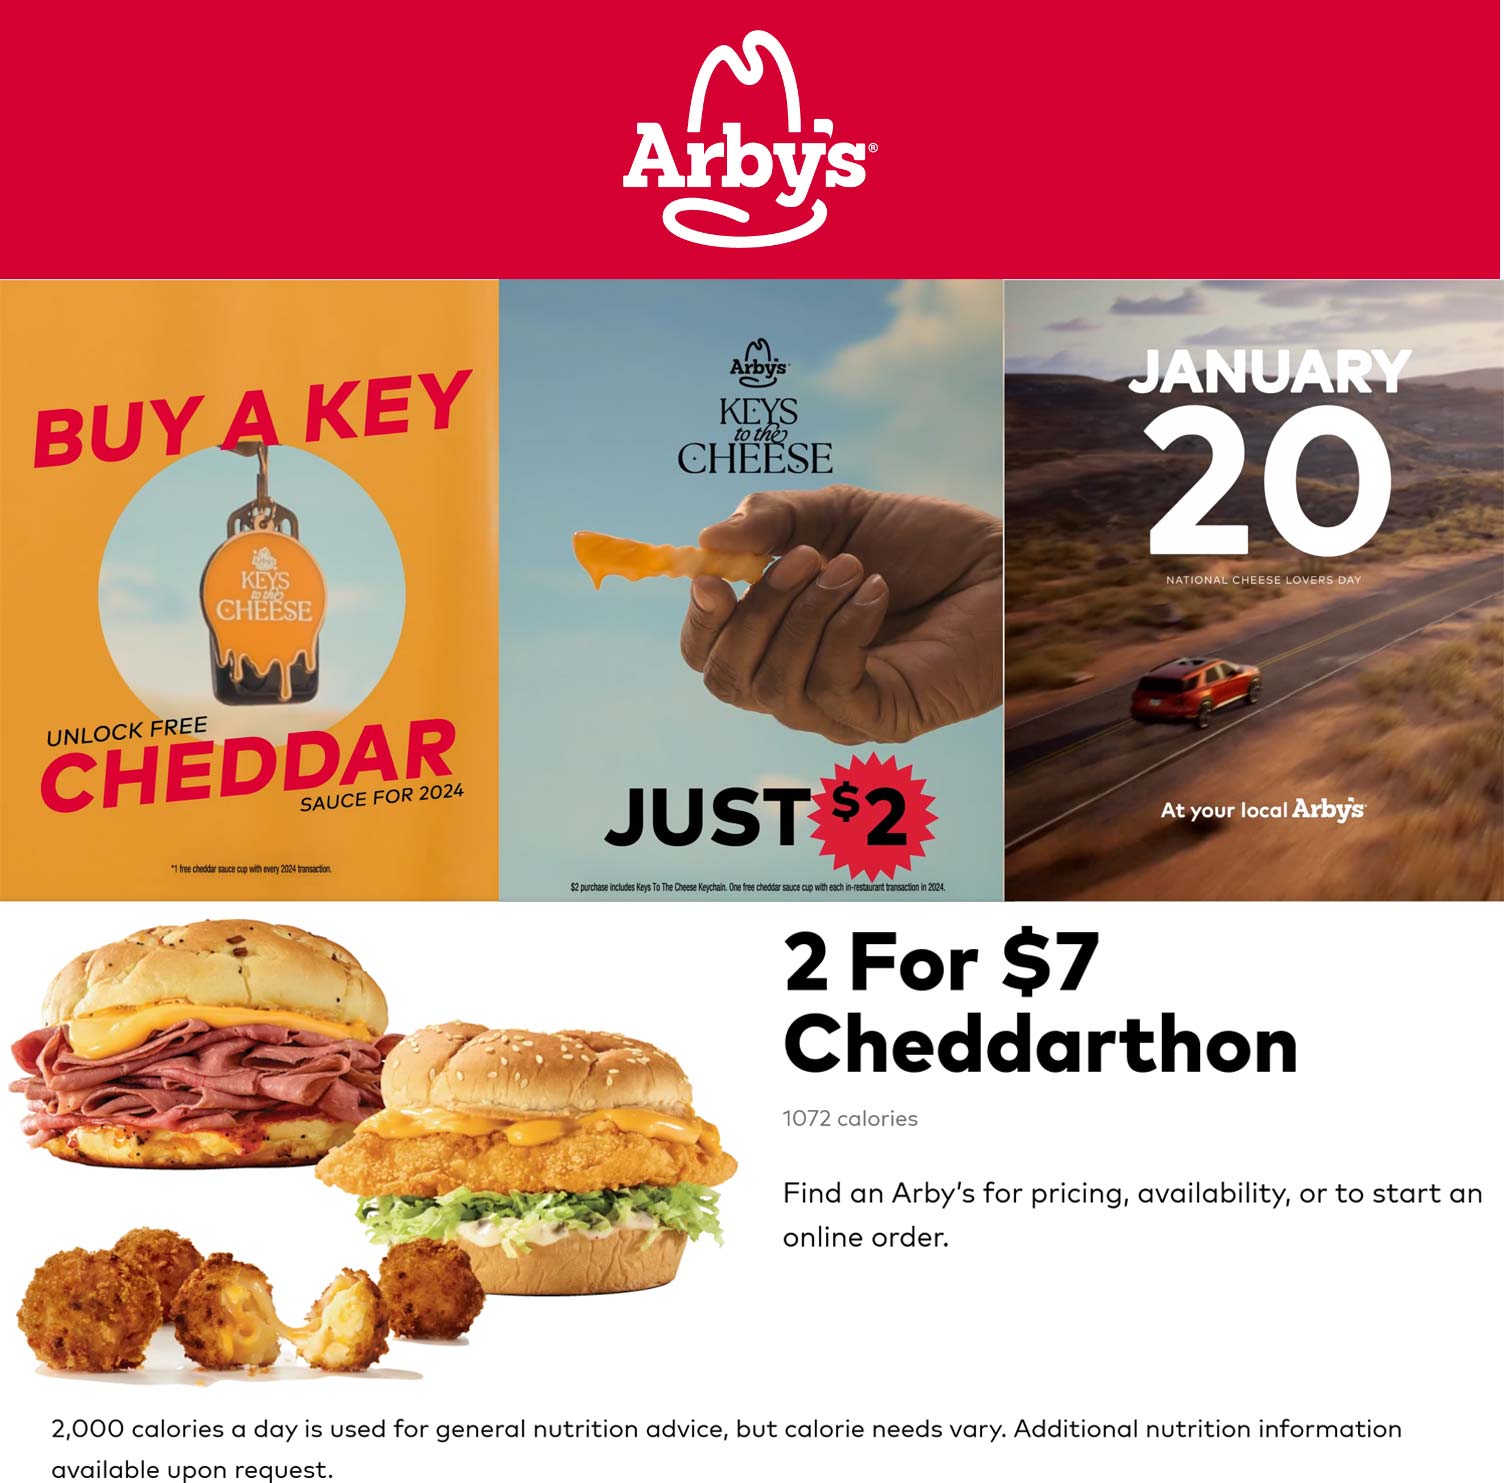 Arbys restaurants Coupon  $2 keychain Saturday unlocks free cheddar all year + 2 for $7 cheddarthon at Arbys restaurants #arbys 